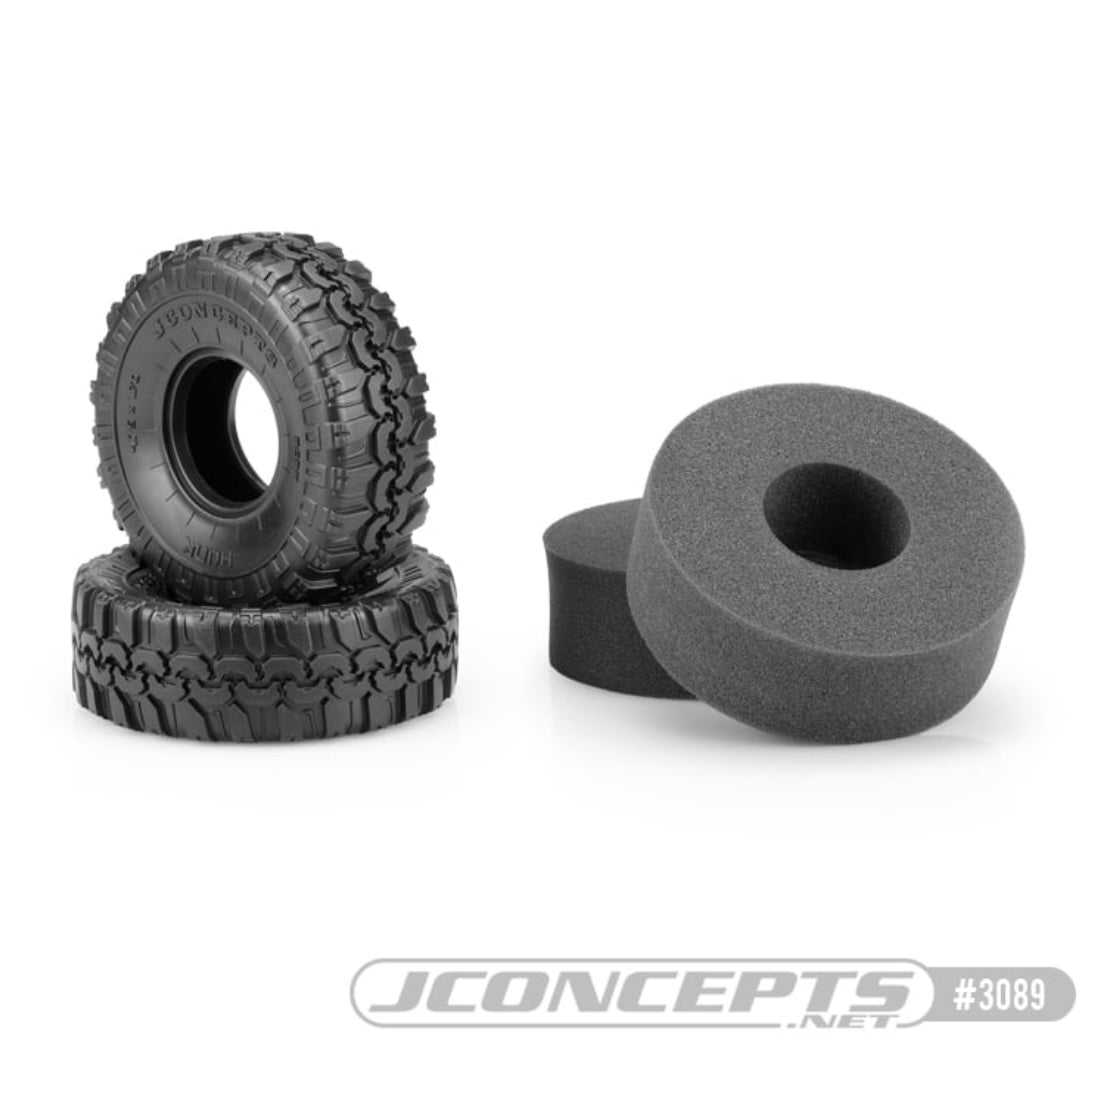 JConcepts Hunk – Performance 1.9" Scaler Tire (4.75" OD) (2pcs)